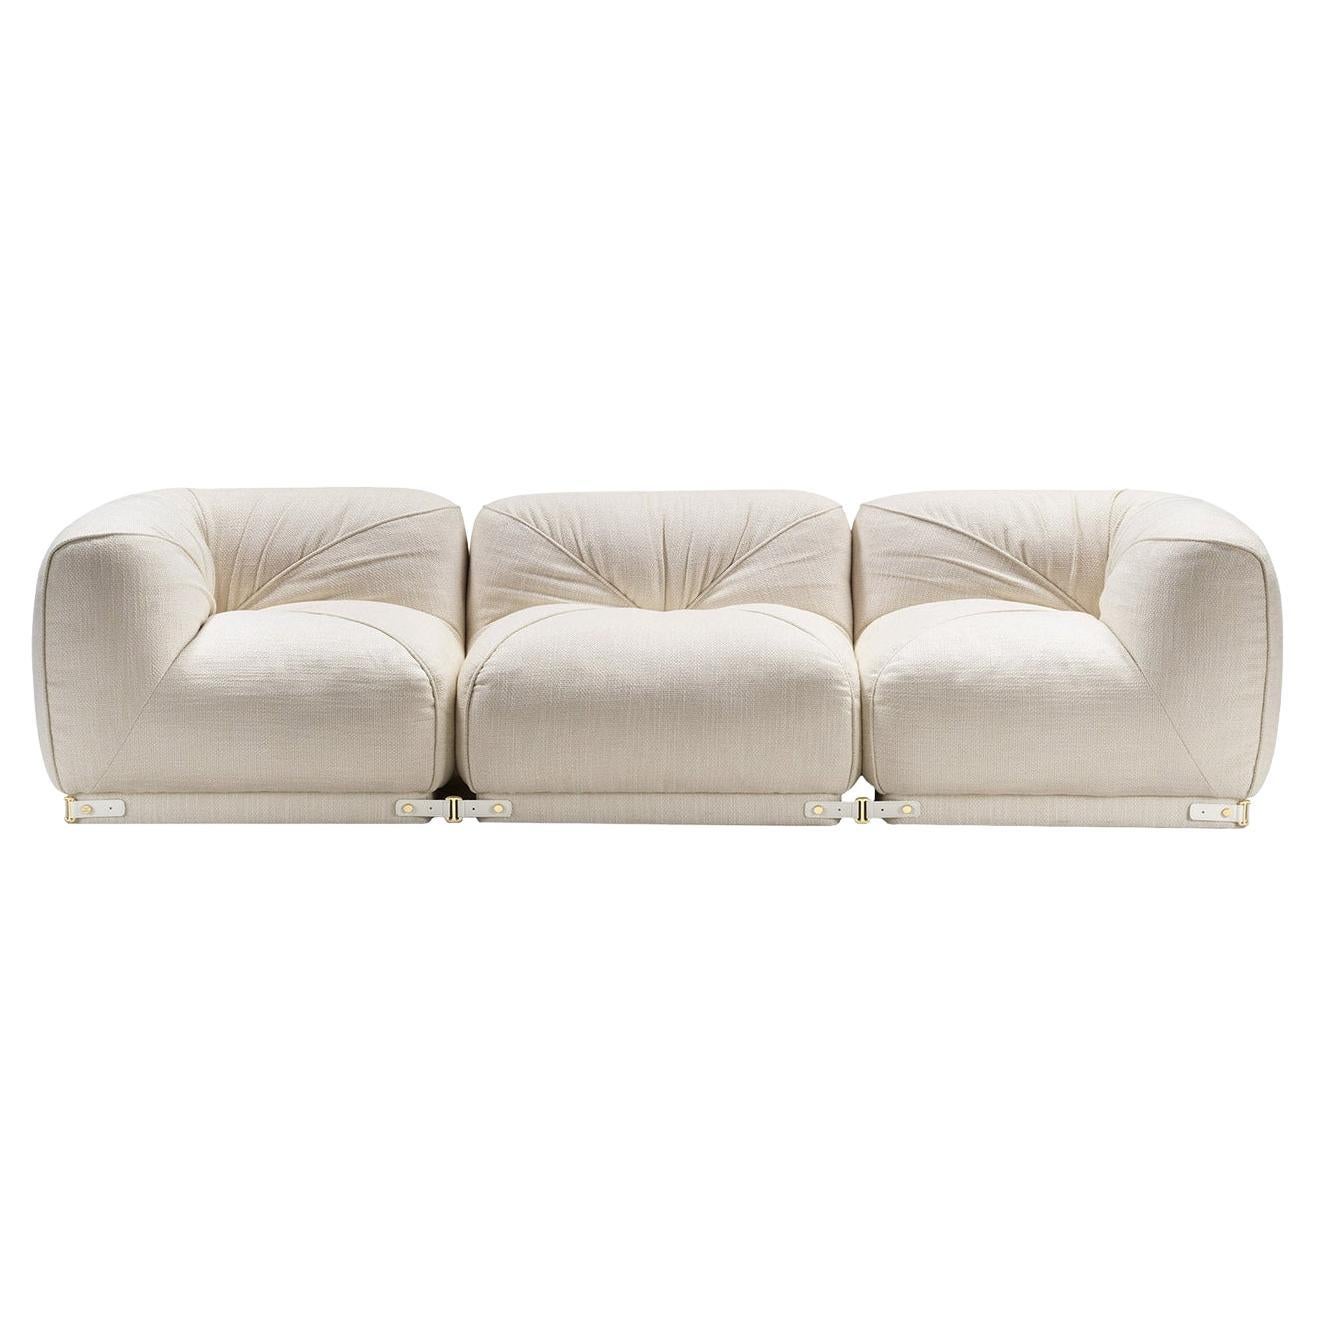 Laisure 3-Seater White Sofa by Lorenza Bozzoli For Sale